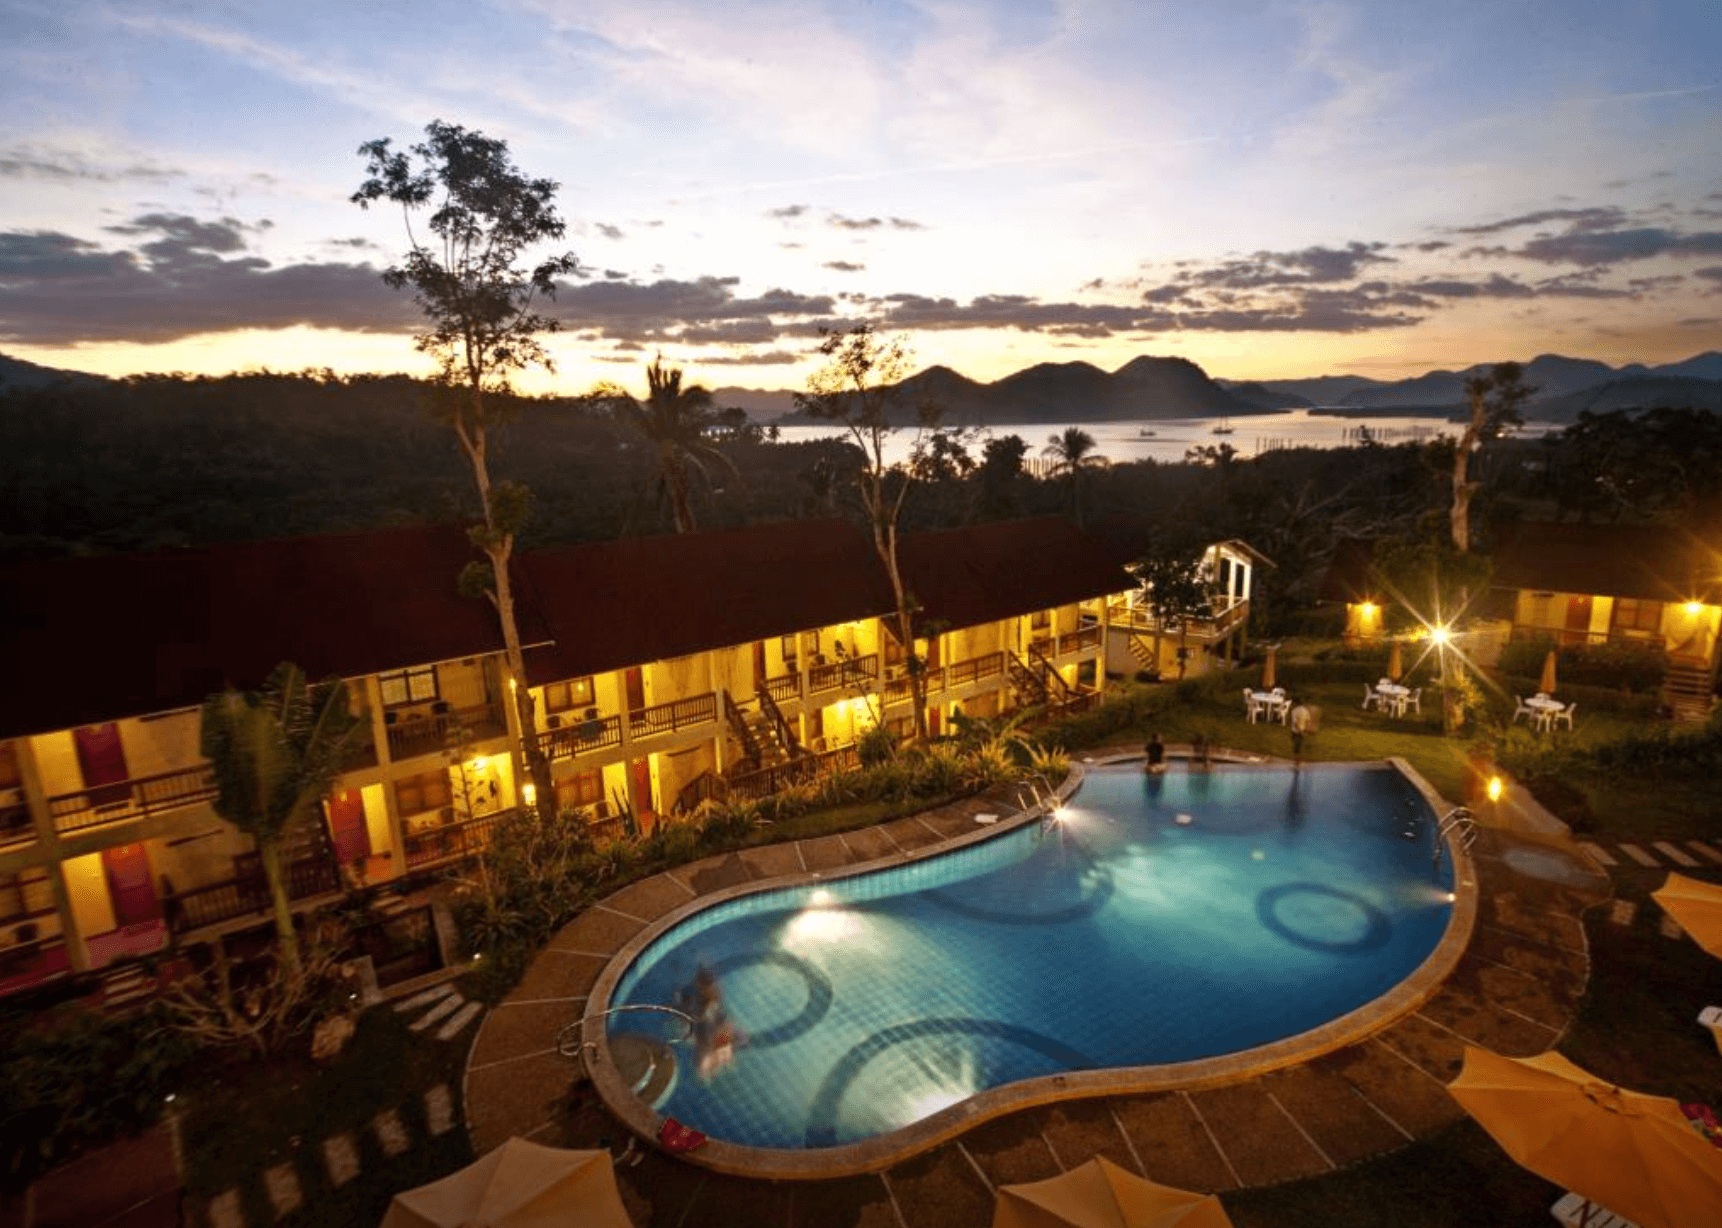 Asia Grand View hotel, Coron, Palawan